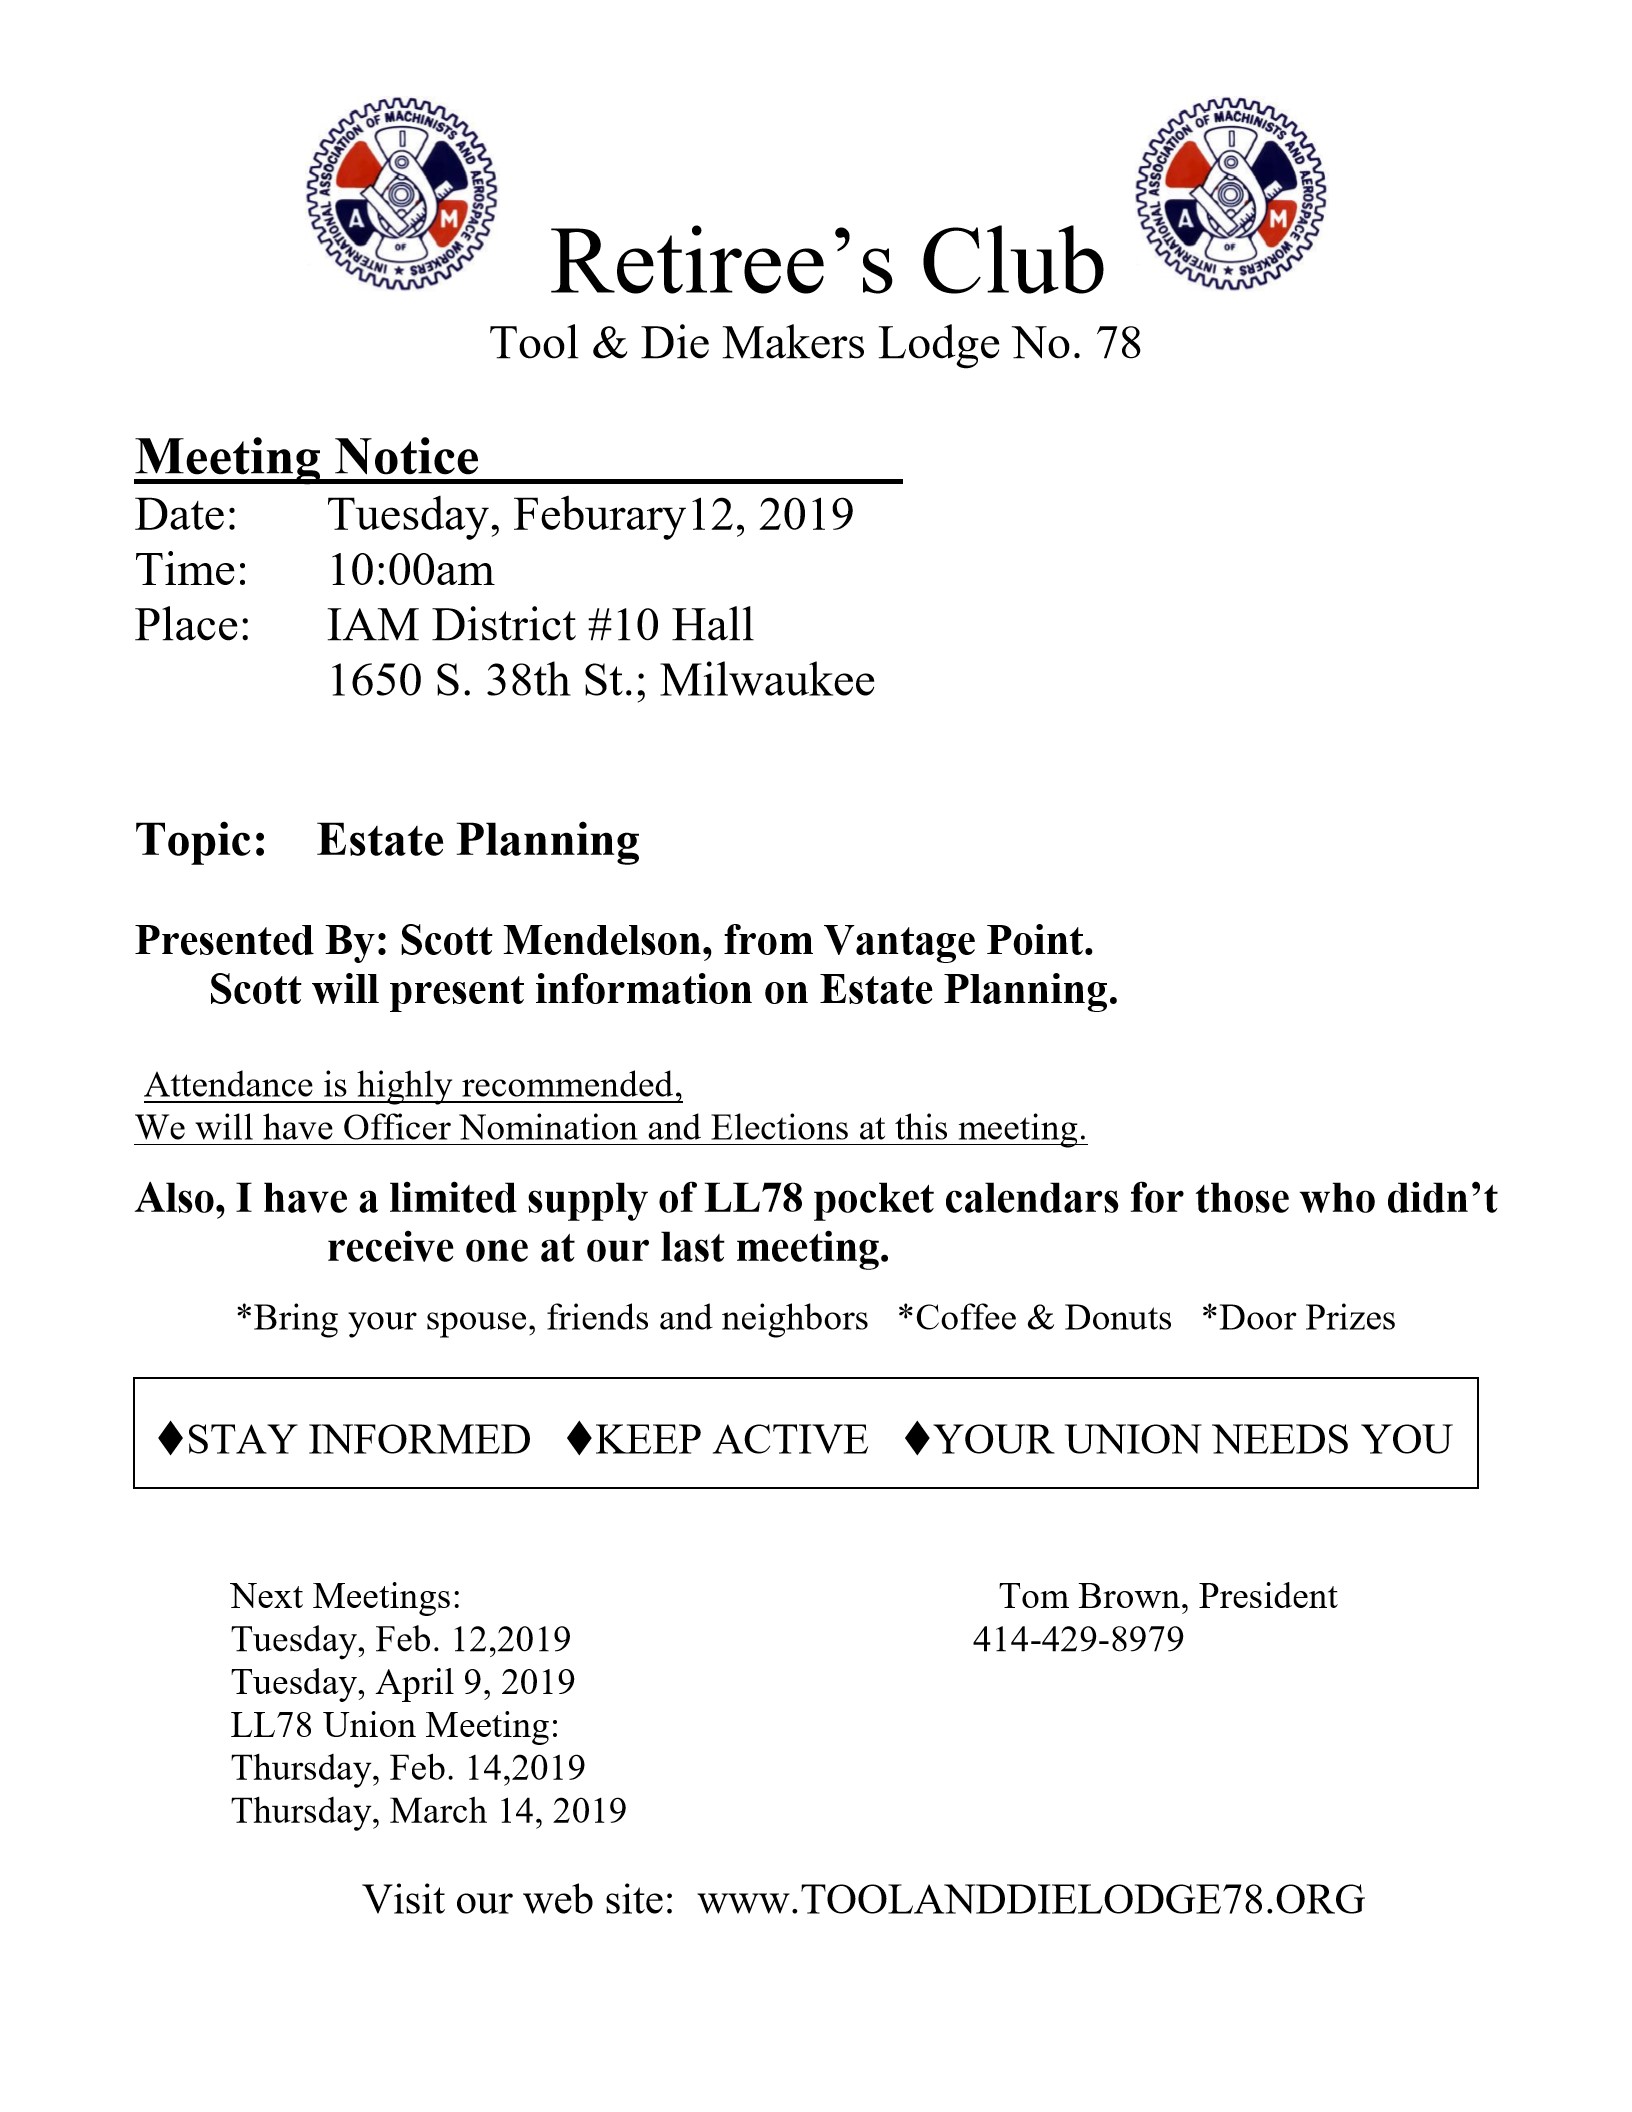 Retiree's Club Feb.12, 2019 Meeting Notice1